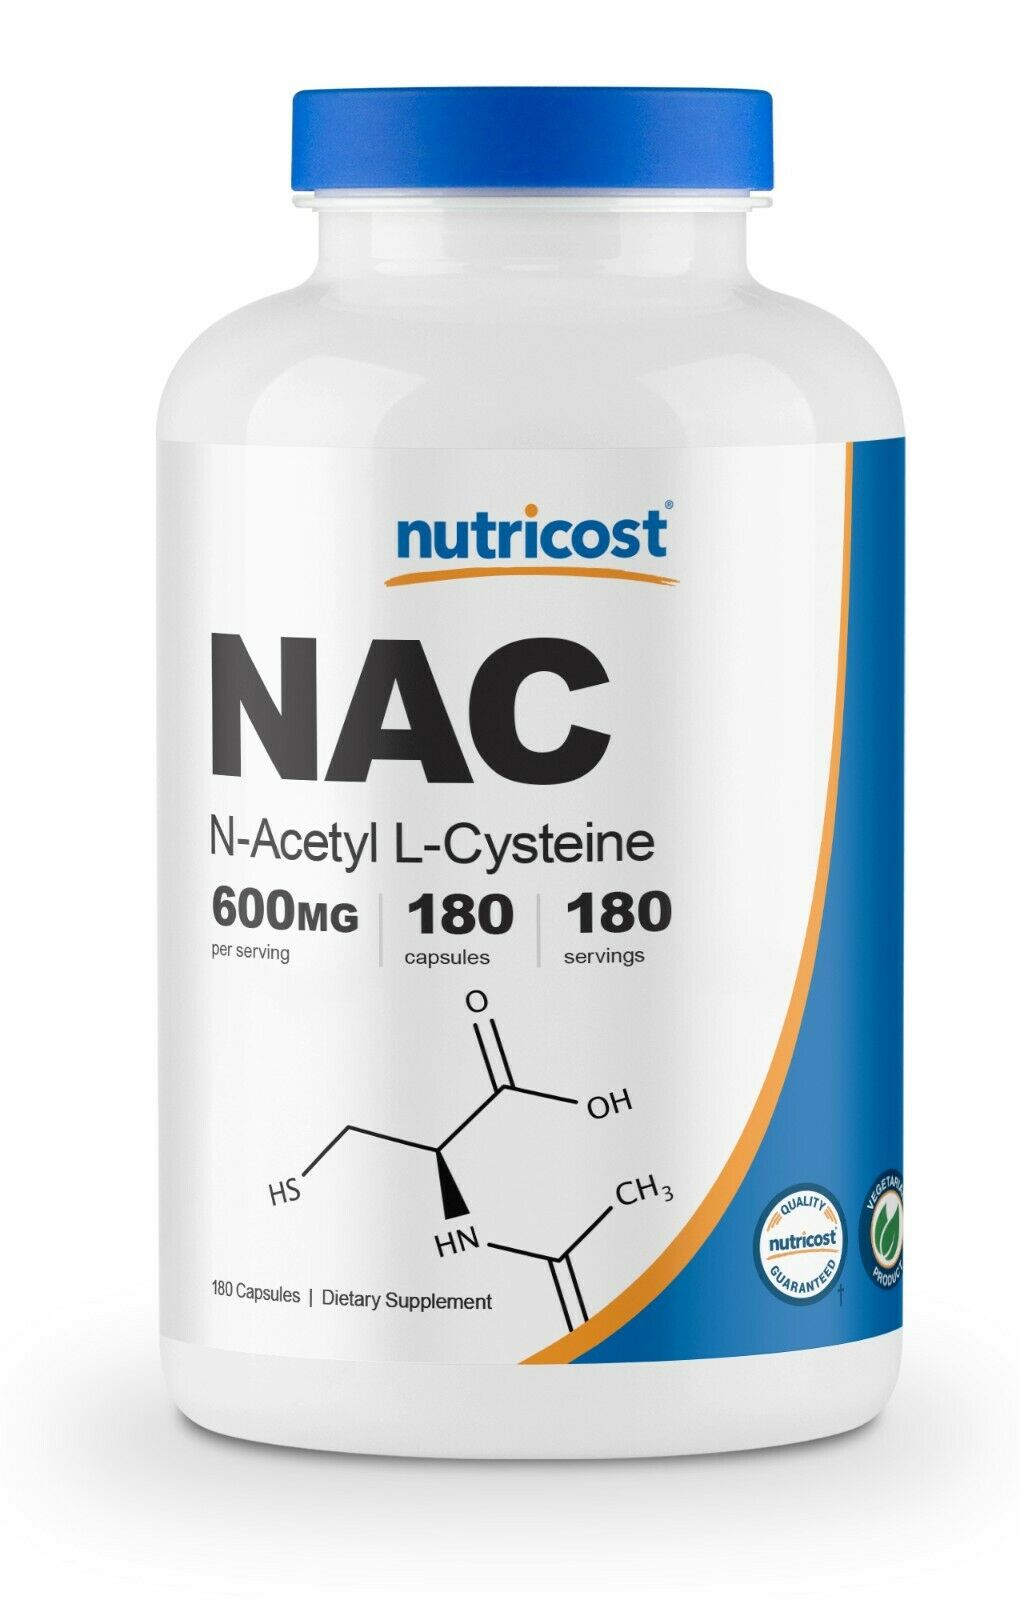 Nutricost N-acetyl L-cysteine (nac) 600mg, 180 Capsules - Non-gmo & Gluten Free